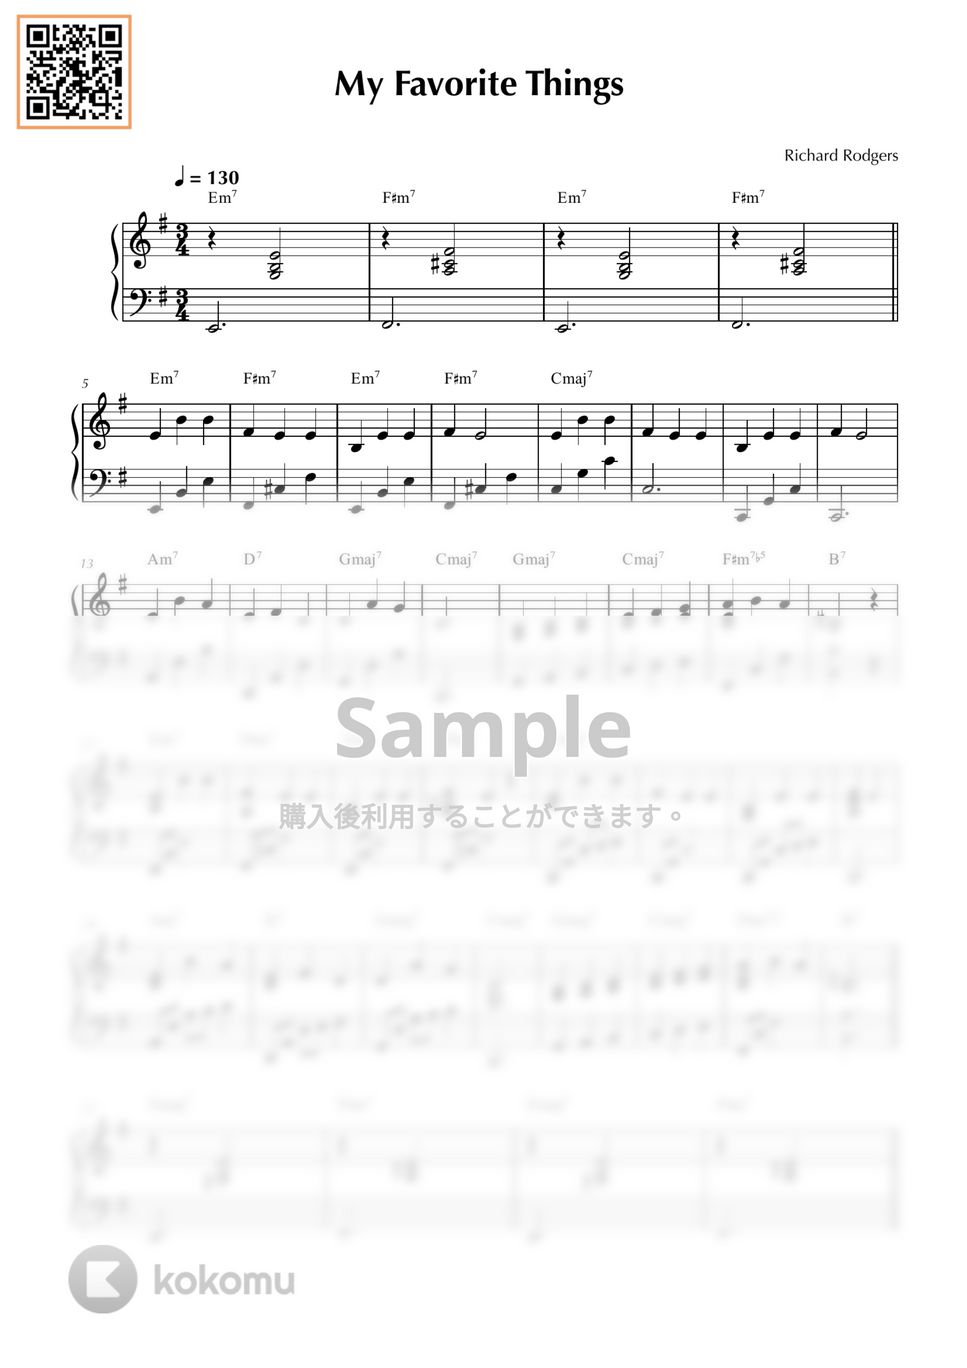 Richard Rodgers - My Favorite Things (Jazz Piano Ver.) by DEUTDAMUSIC